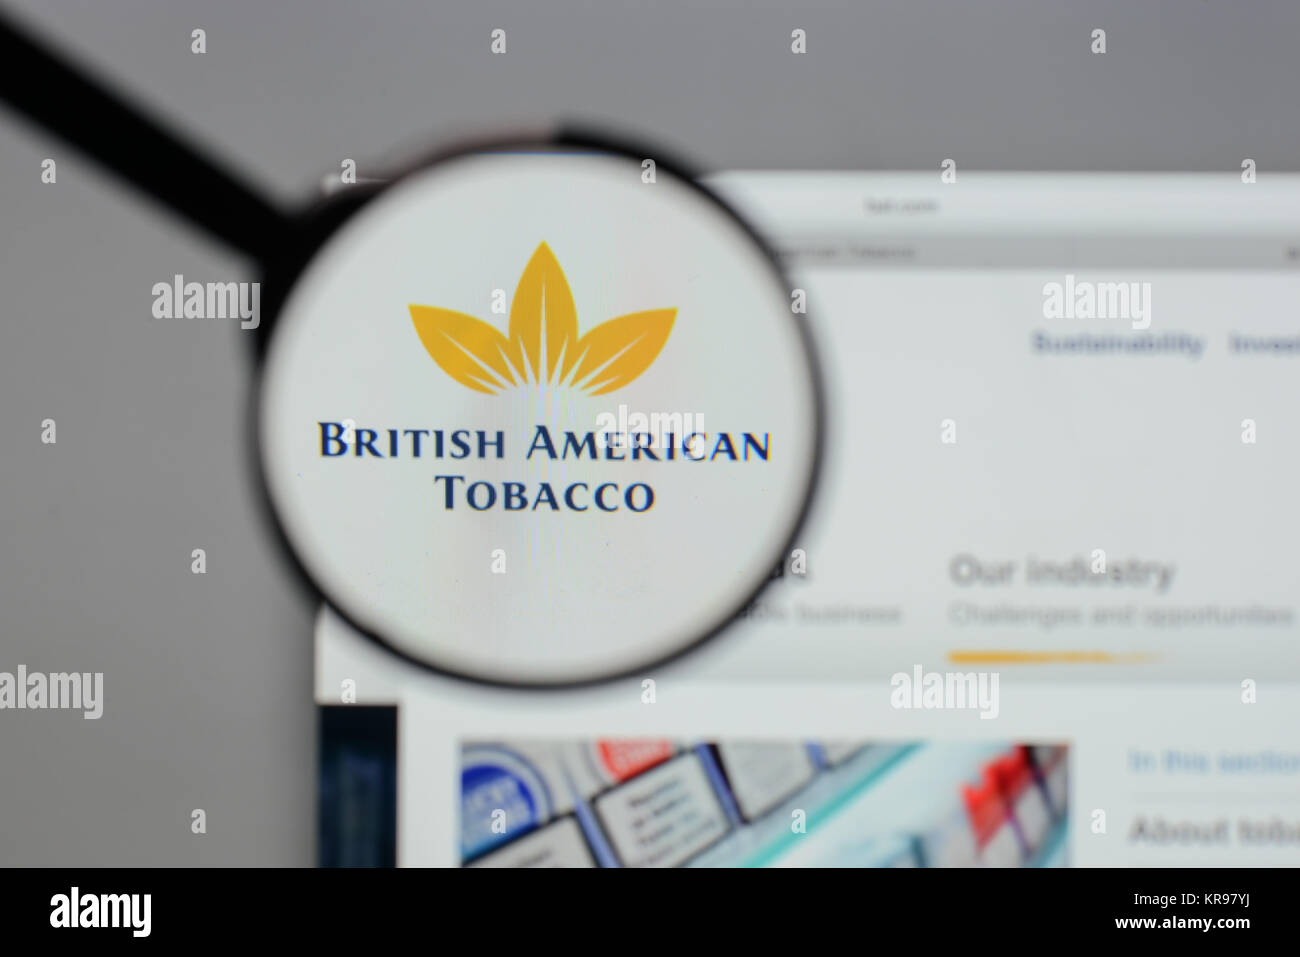 British American Tobacco Bangladesh - Our brands